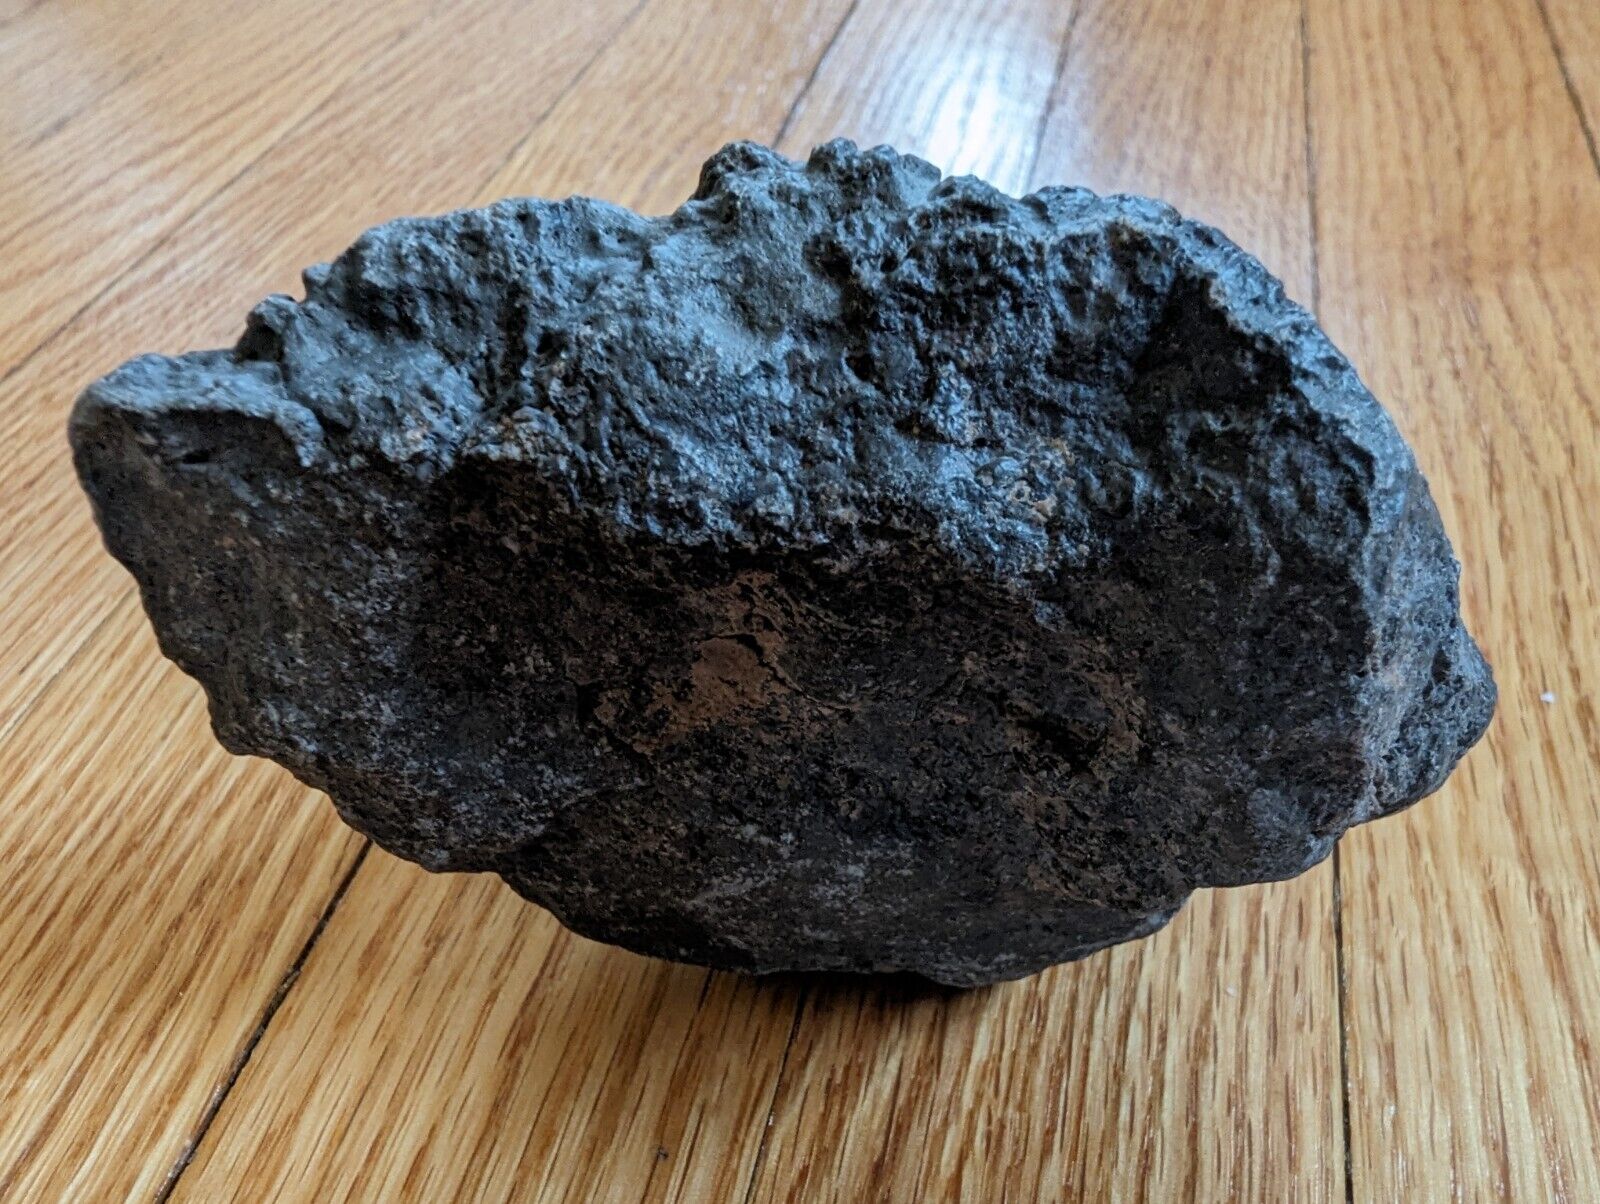 Jikharra 001 Eucrite Melt Breccia Meteorite - Asteroid Vesta - 234g 